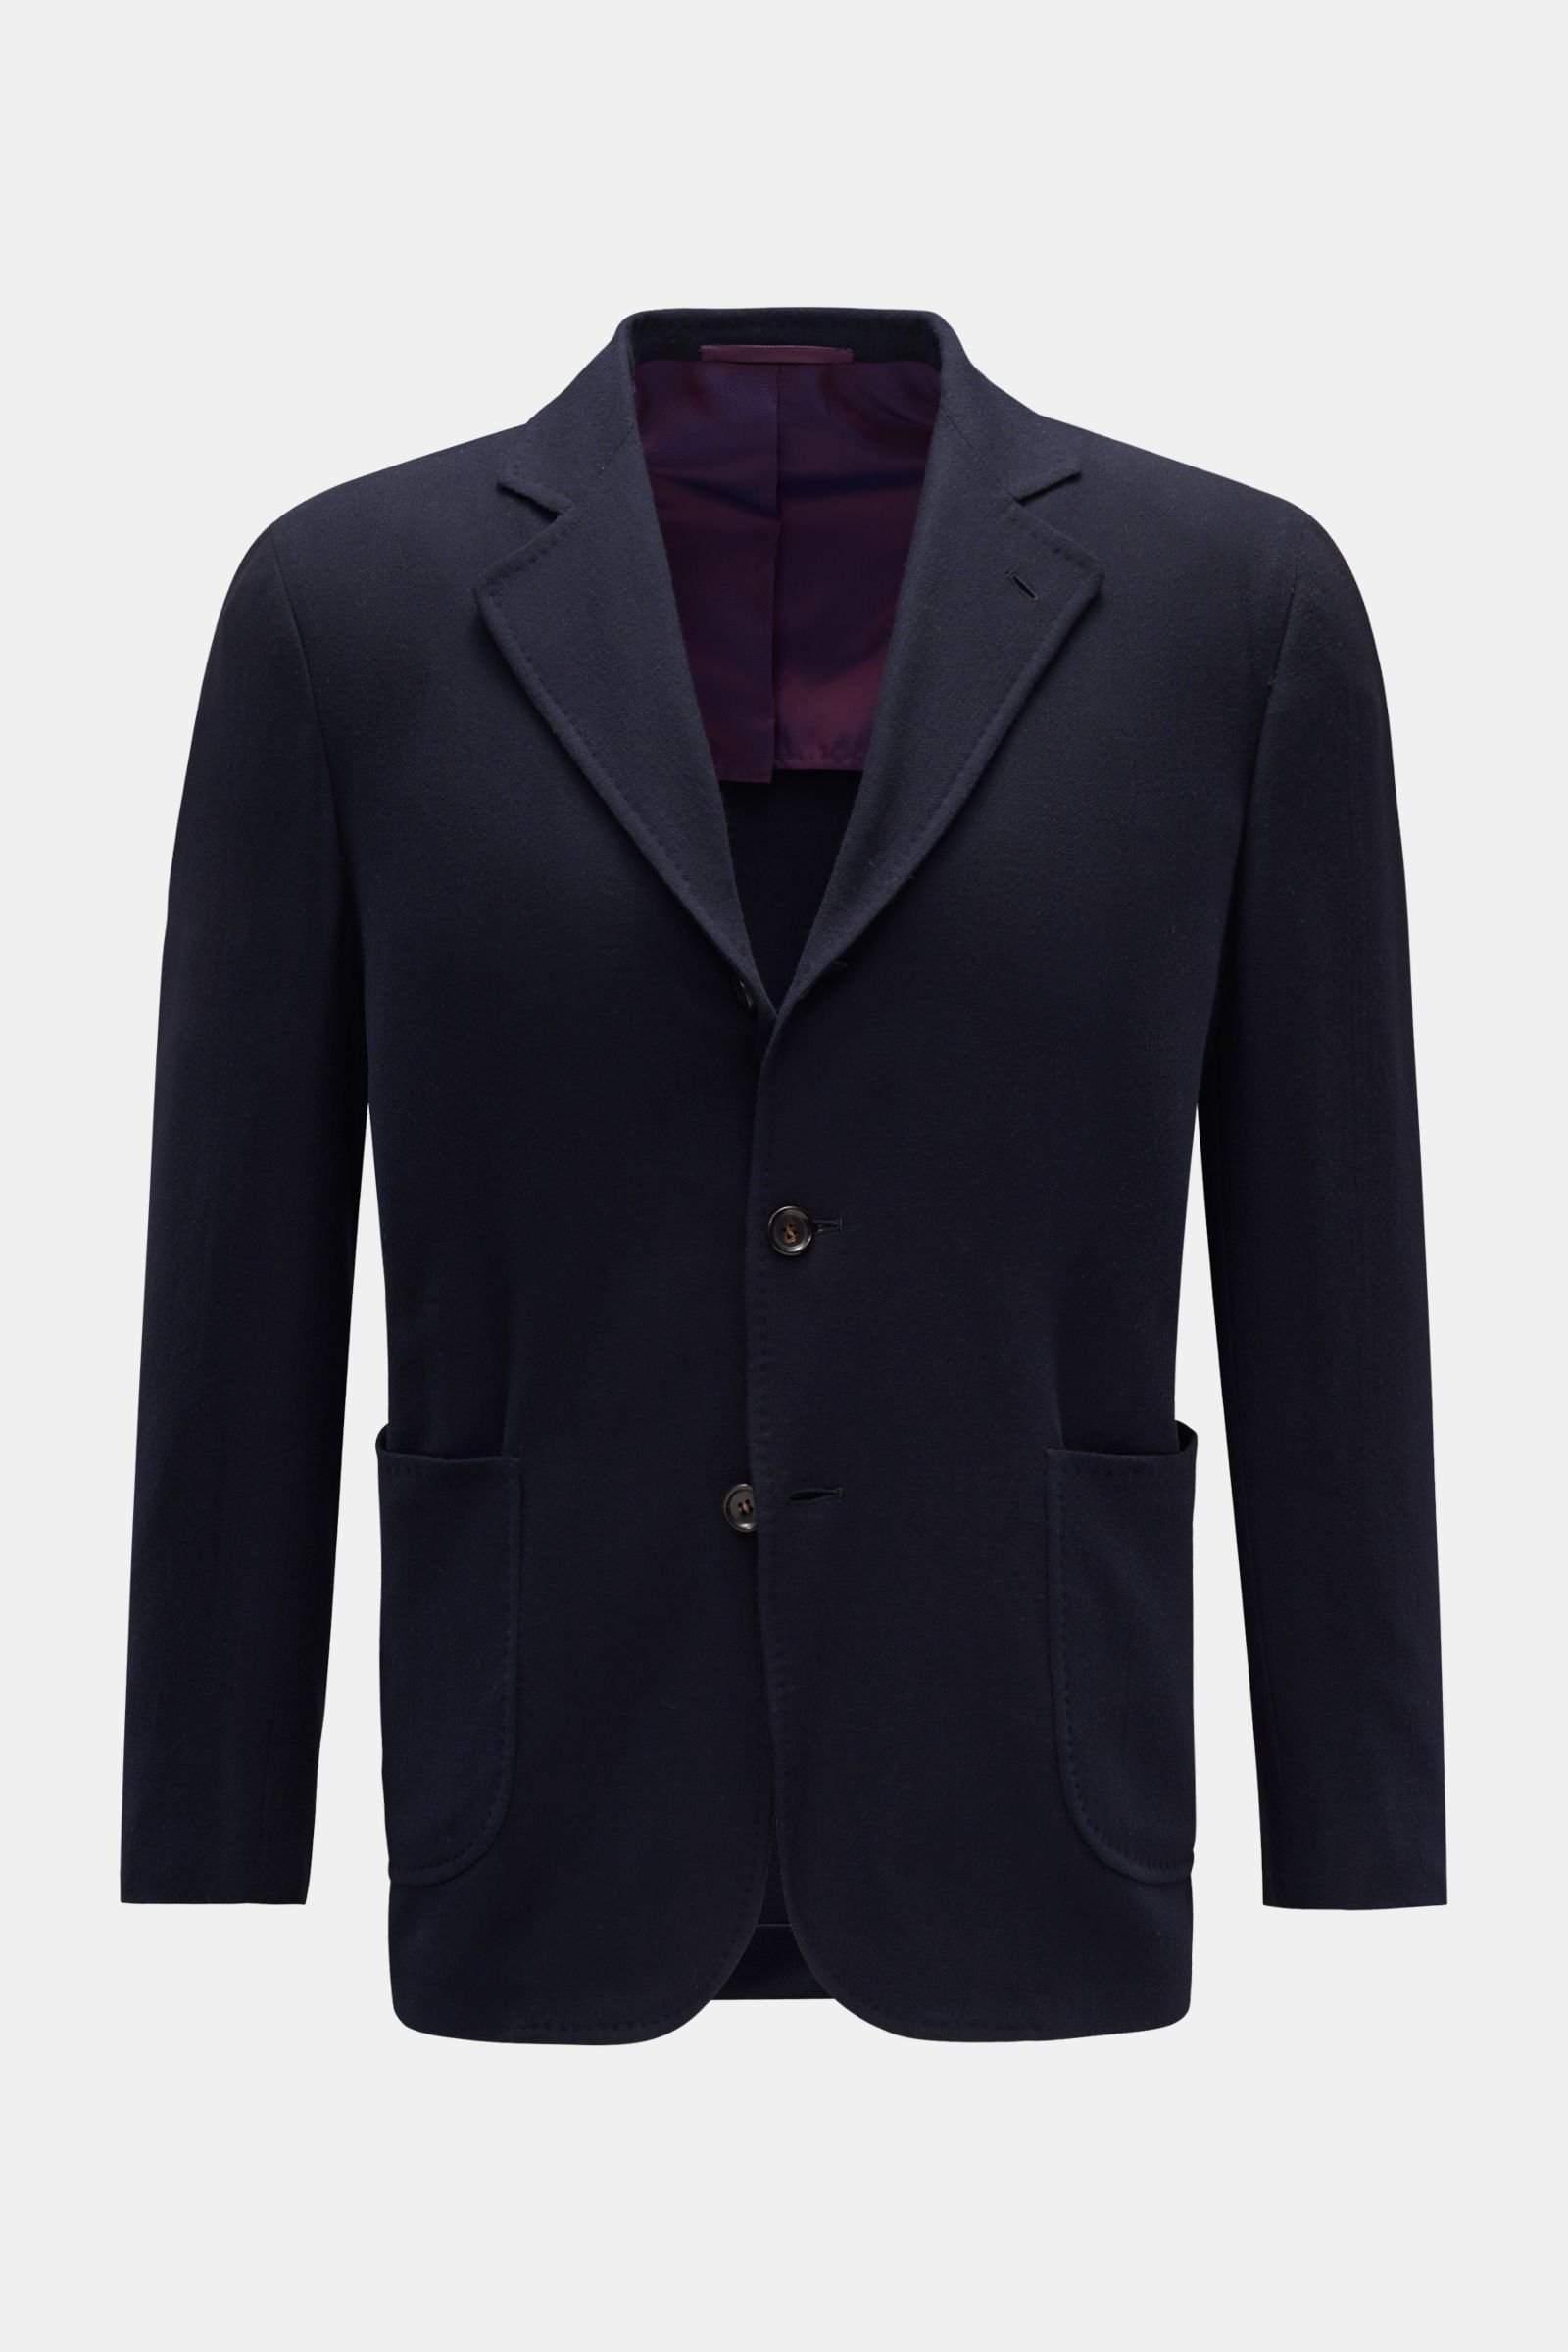 Smart-casual jacket 'Romolo' dark navy